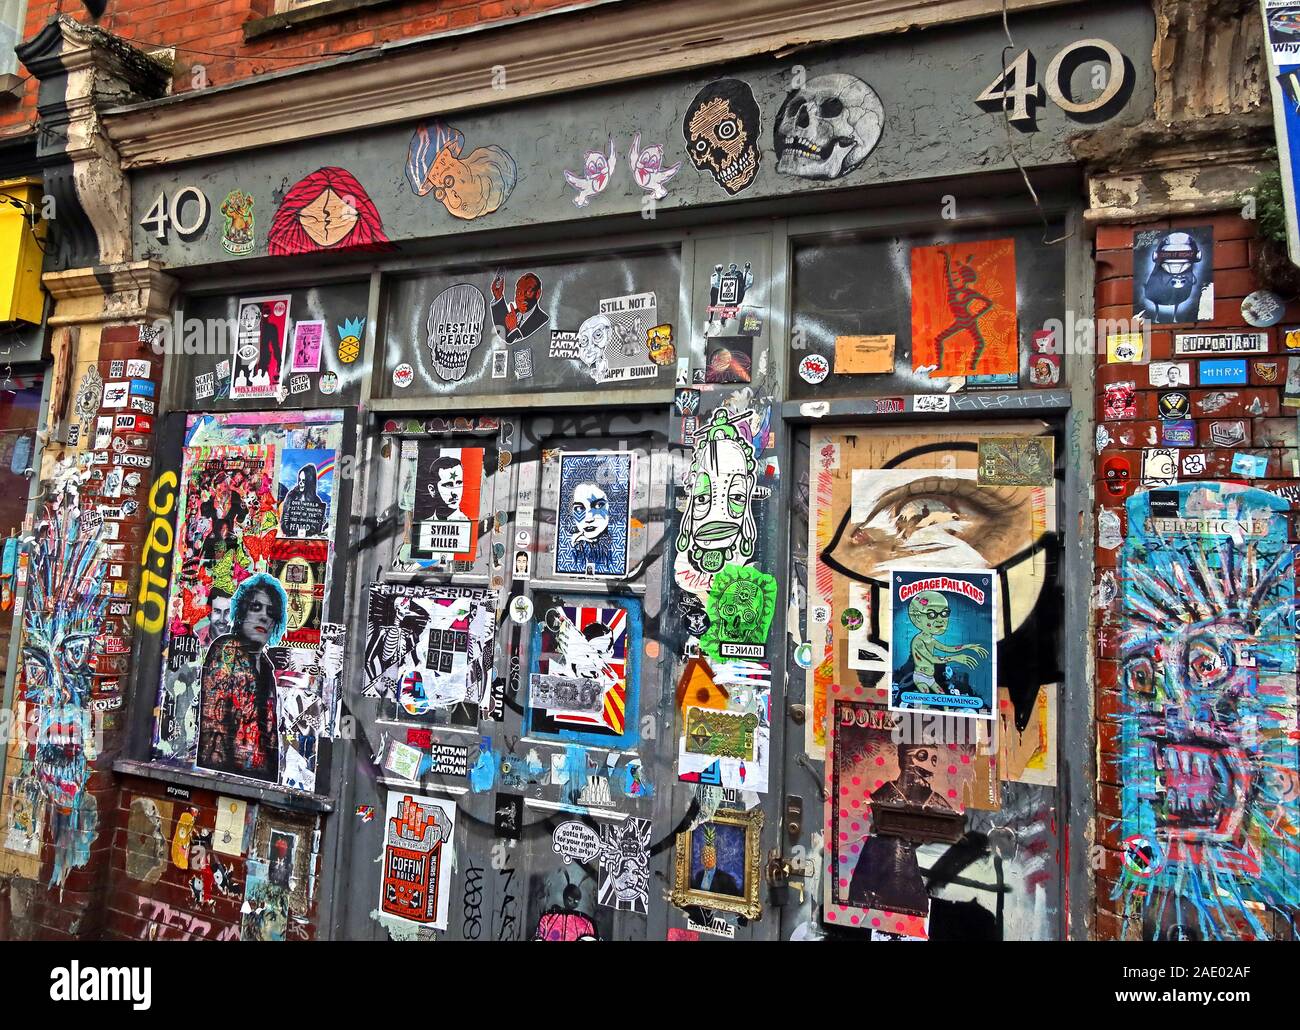 40 Hanbury St, Brick Lane, Kunst und Graffiti, Shoreditch, Tower Hamlets, East End, London, South East, England, Großbritannien, E1 6QL Stockfoto